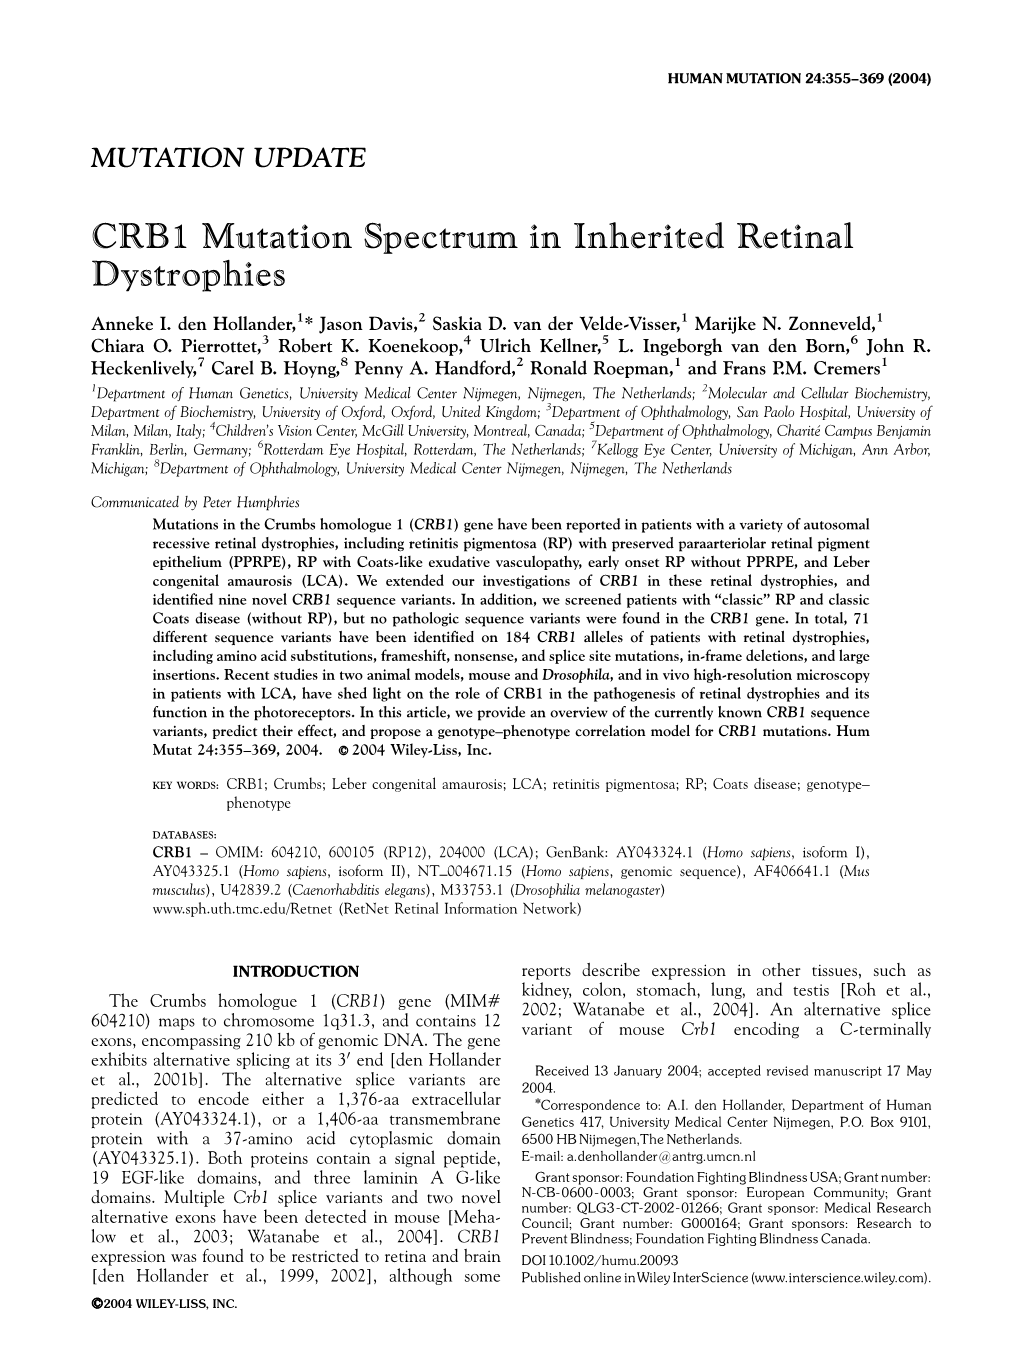 CRB1 Mutation Spectrum in Inherited Retinal Dystrophies